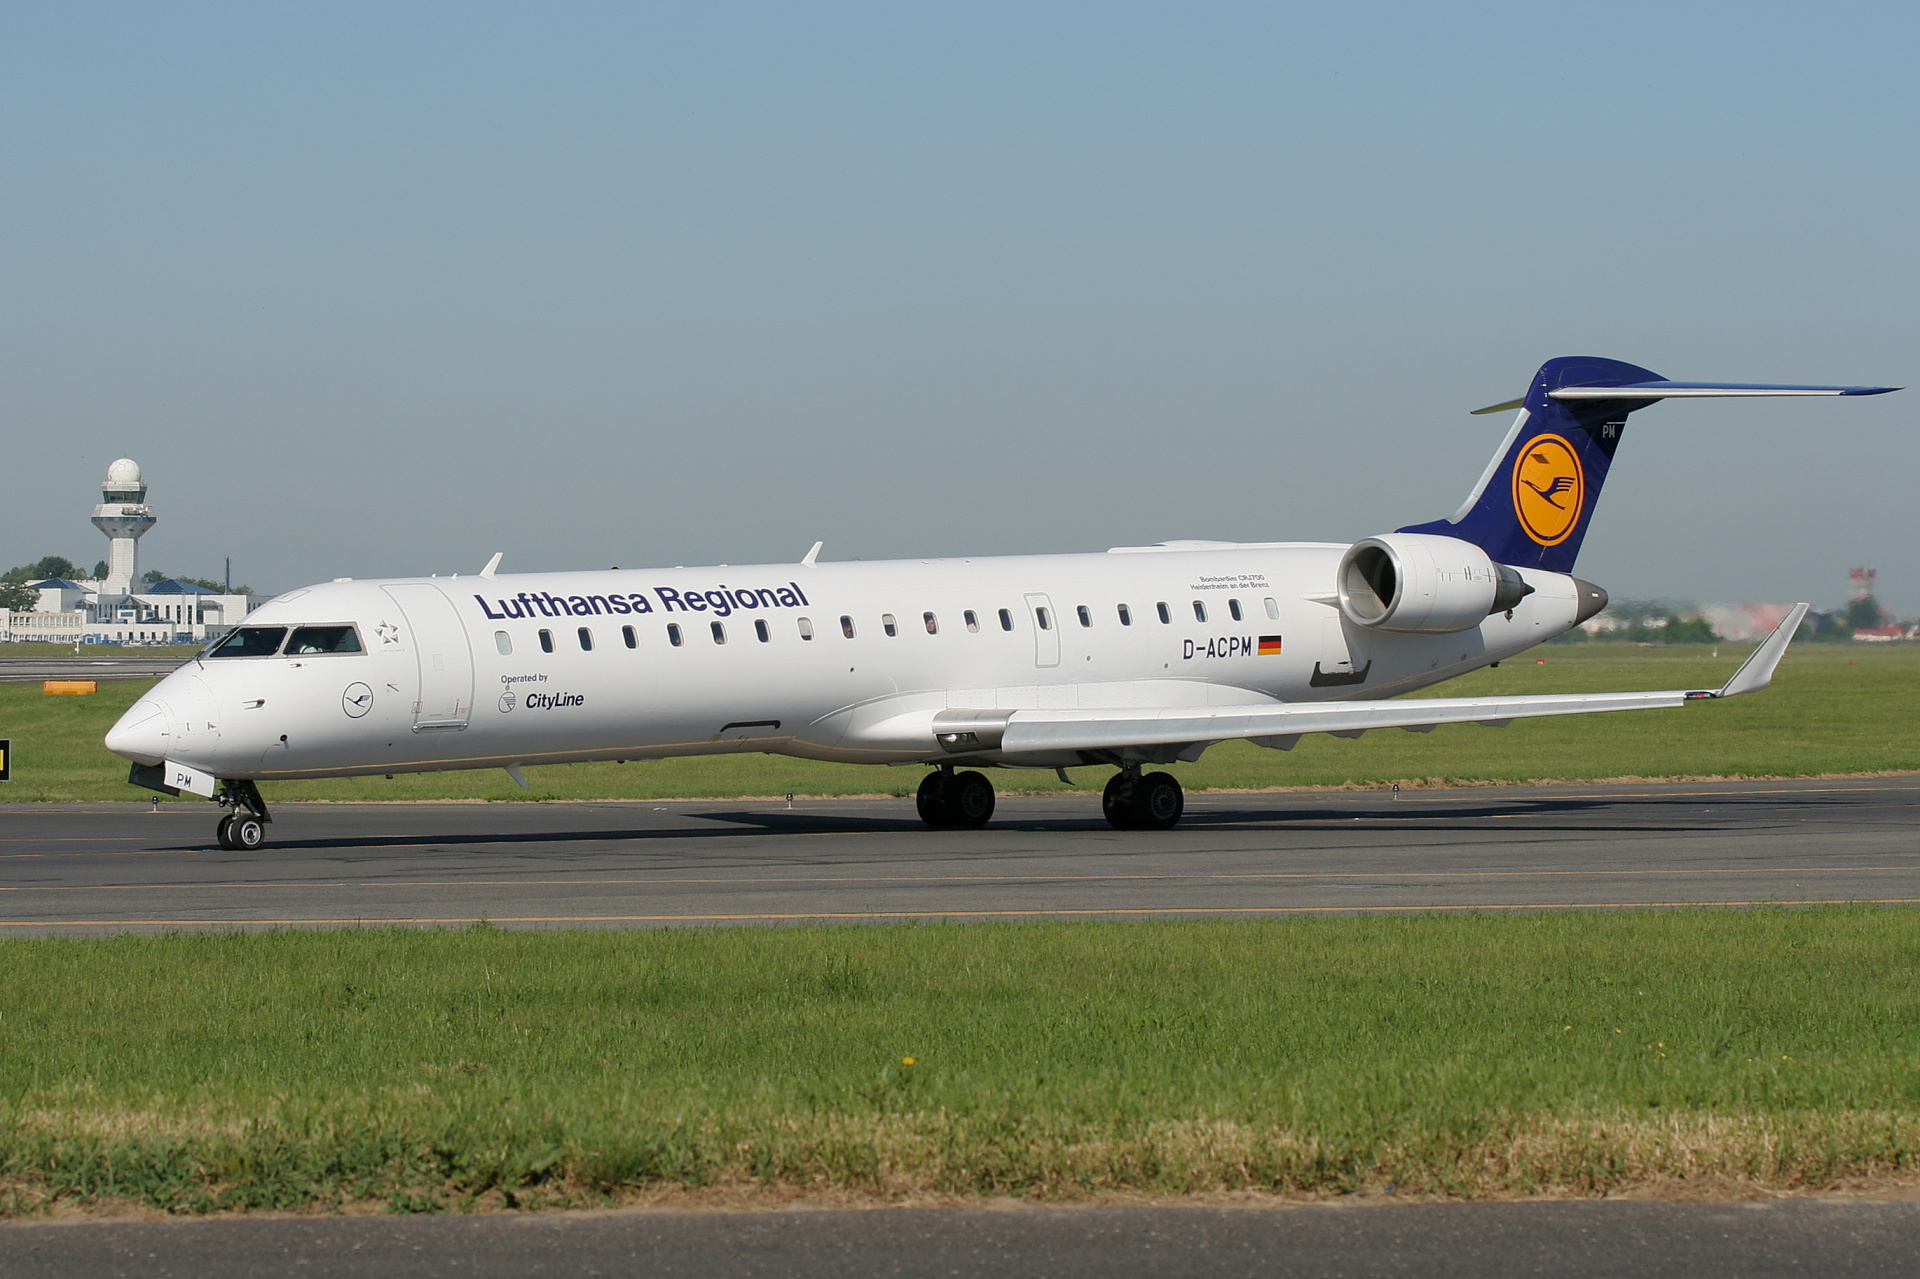 D-ACPM, Lufthansa Regional (CityLine) (Aircraft » EPWA Spotting » Mitsubishi Regional Jet » CRJ-700)